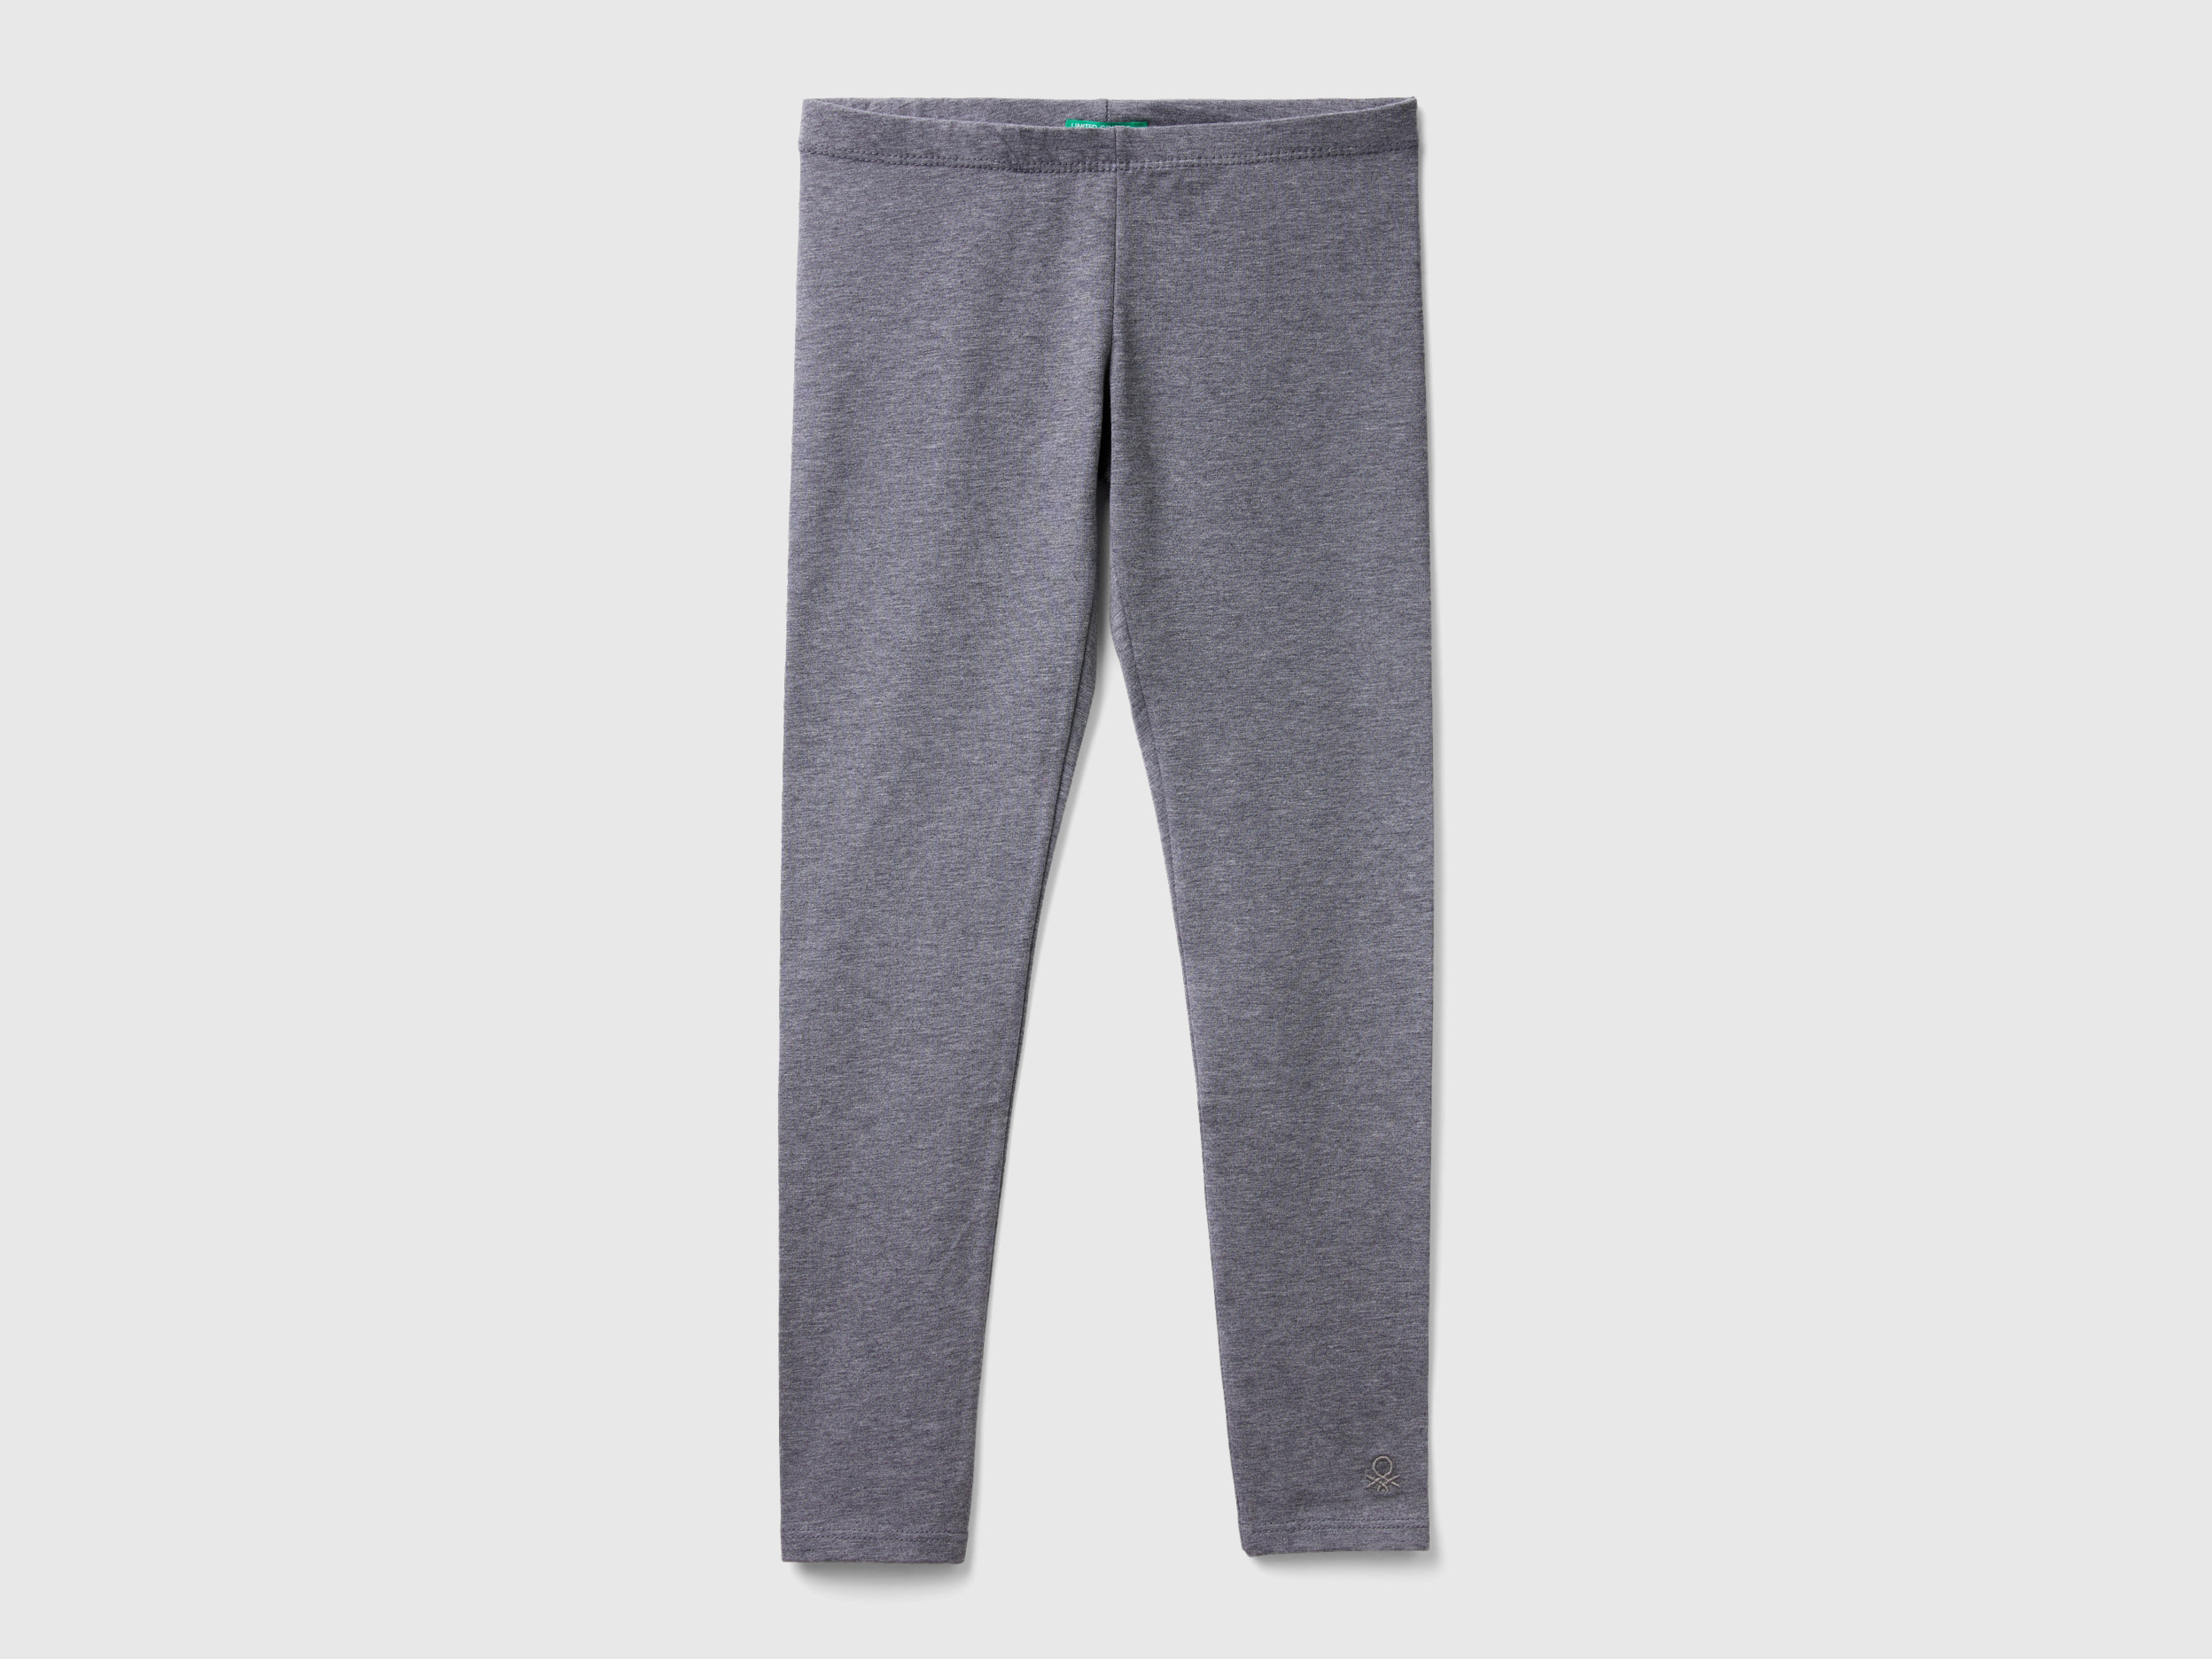 Benetton, Leggings In Stretch Cotton With Logo, size S, Dark Gray, Kids